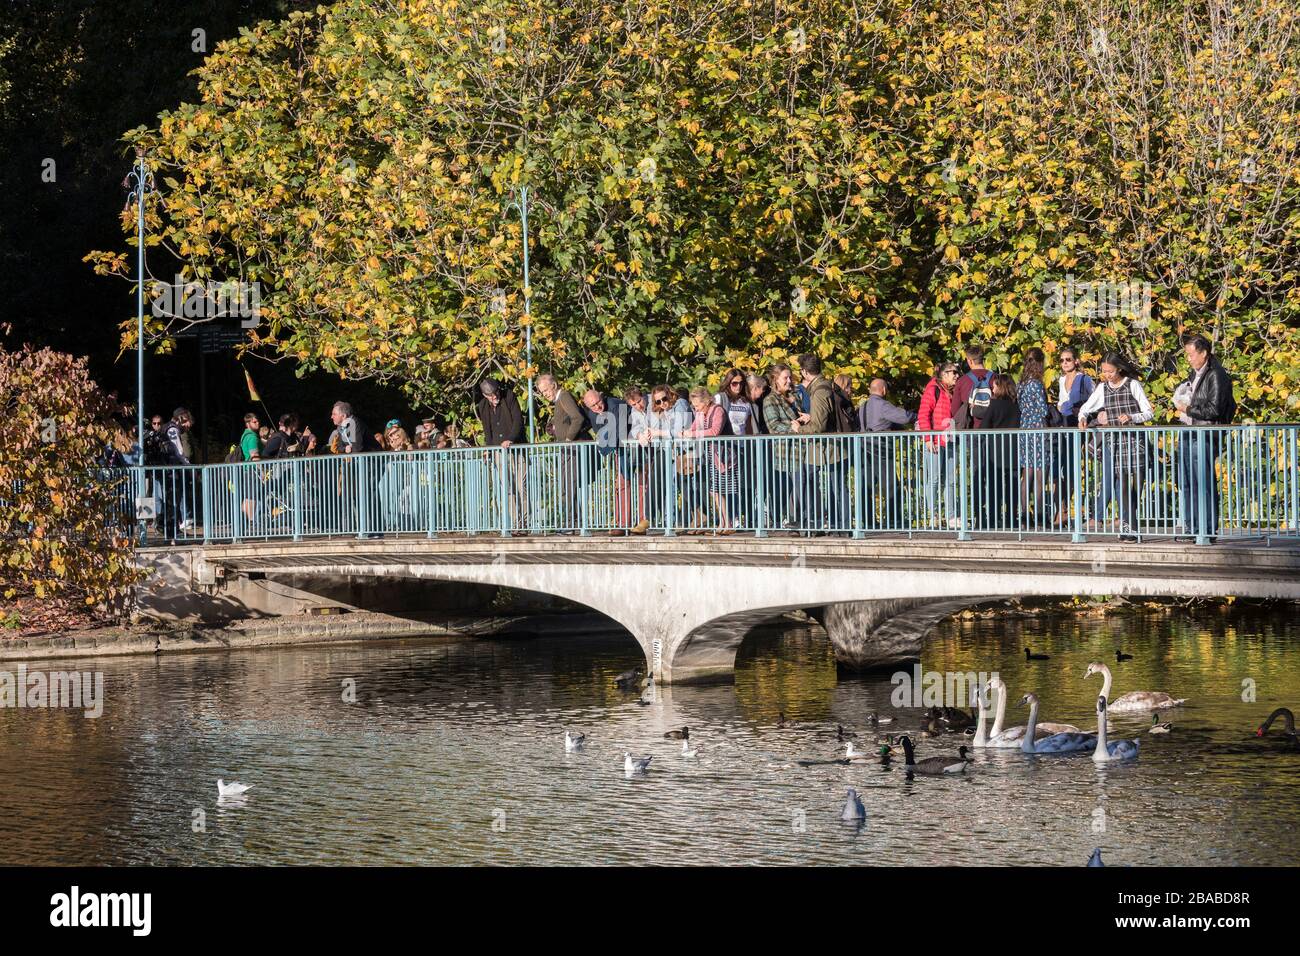 People on The Blue Bridge, St James's Park, Royal Parks, London, England, UK Stock Photo